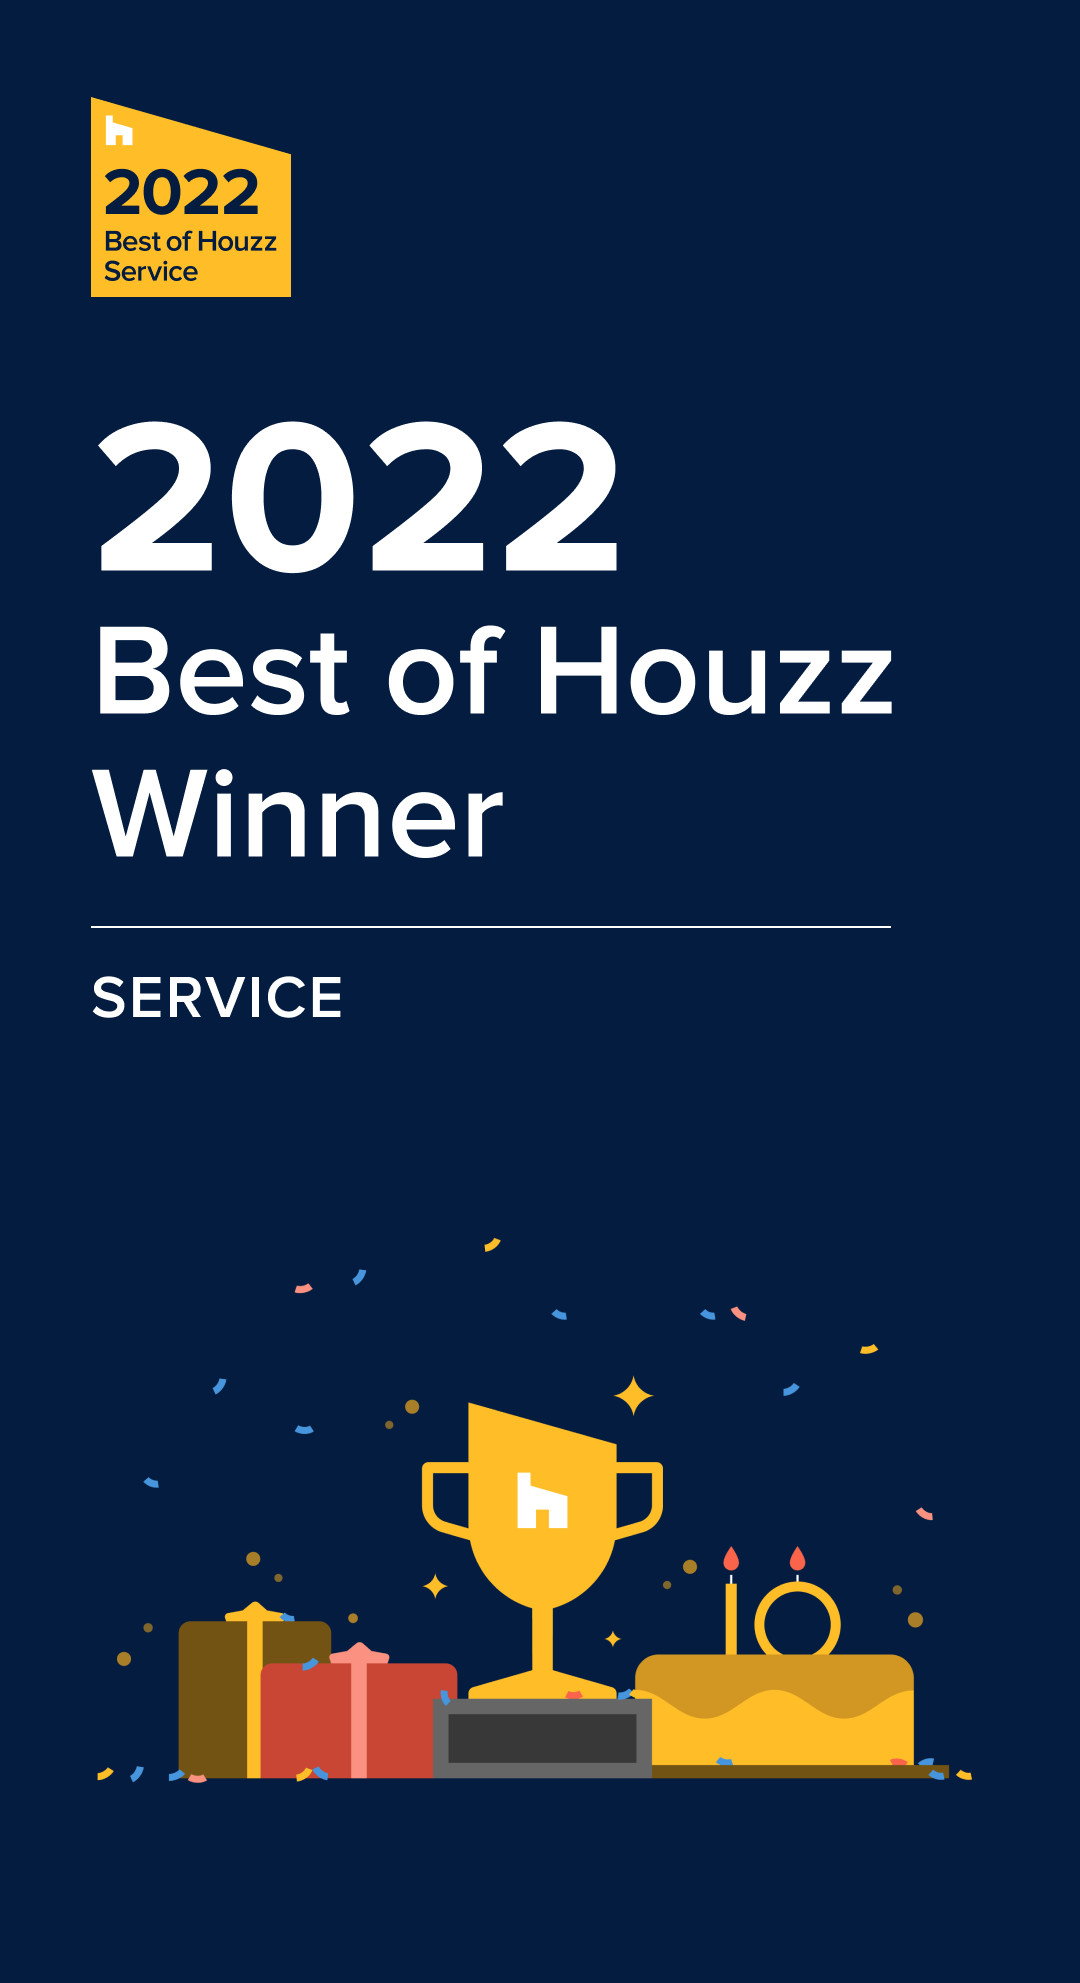 Best of Houzz award